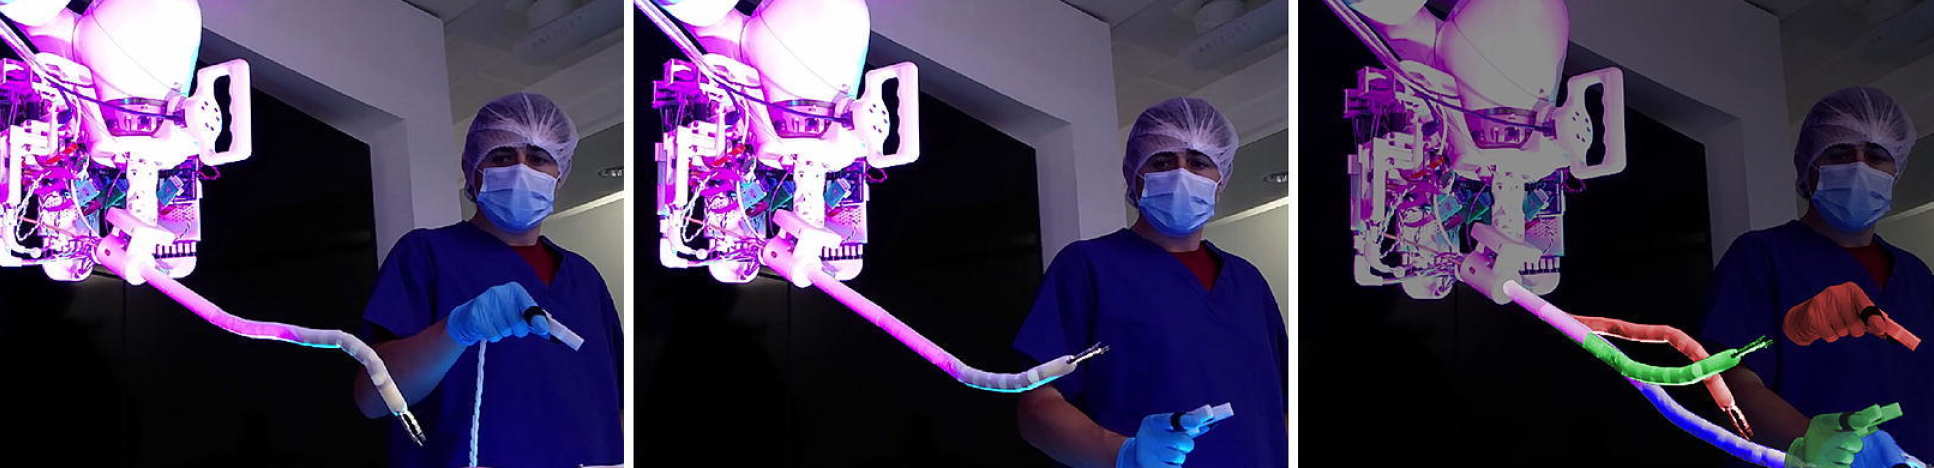 The i2Snake Robotic Platform for Endoscopic Surgery